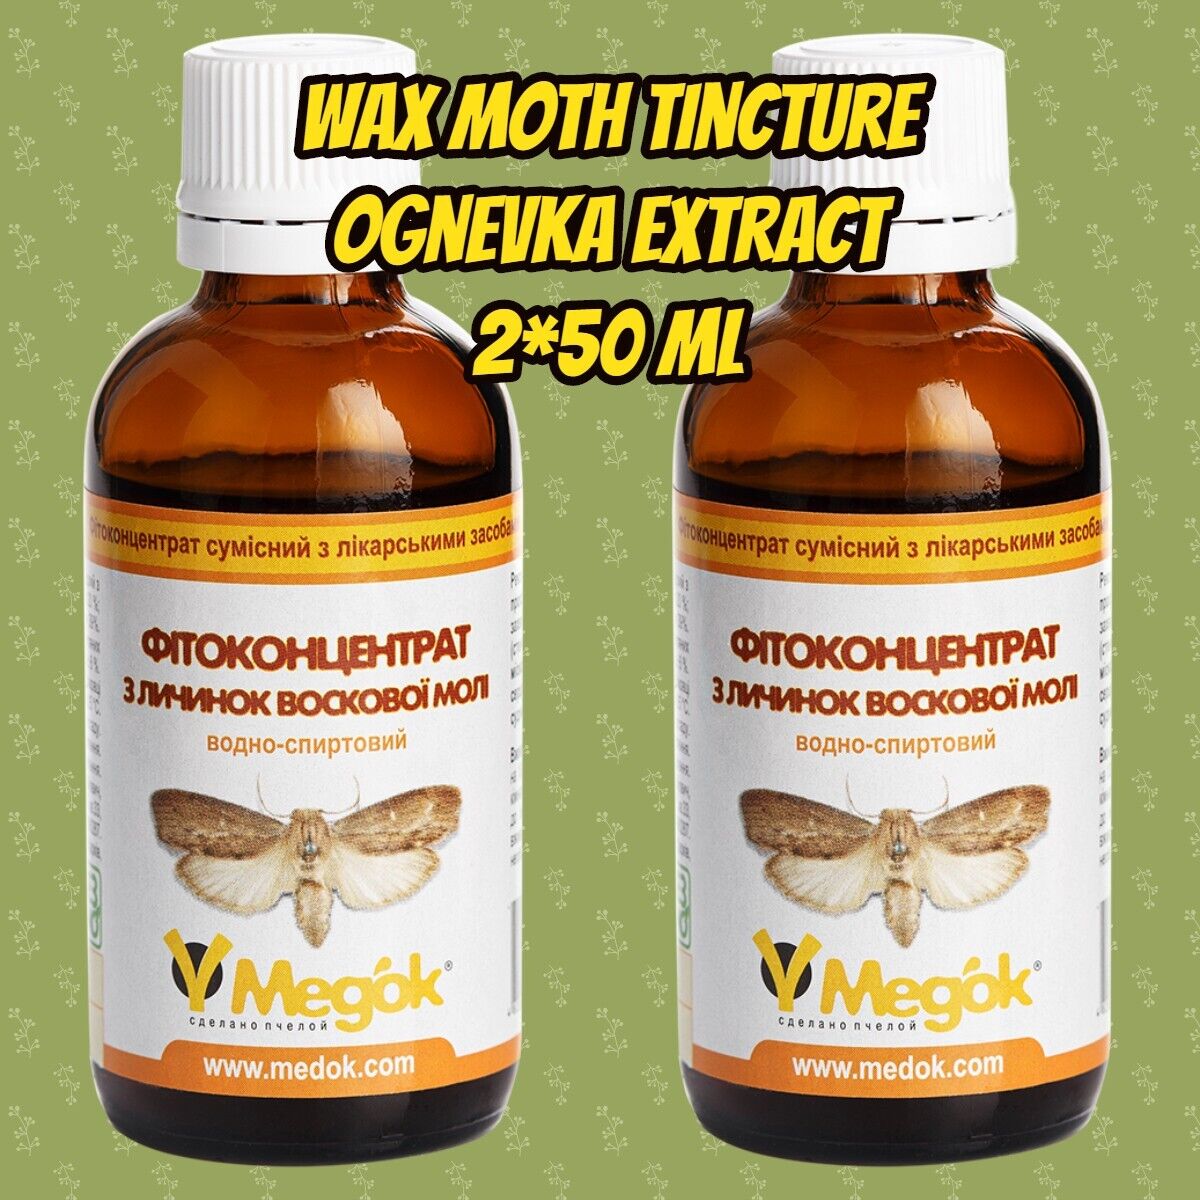 Wax Moth Tincture Ognevka Extract Organic Ukraine 2*50ml  